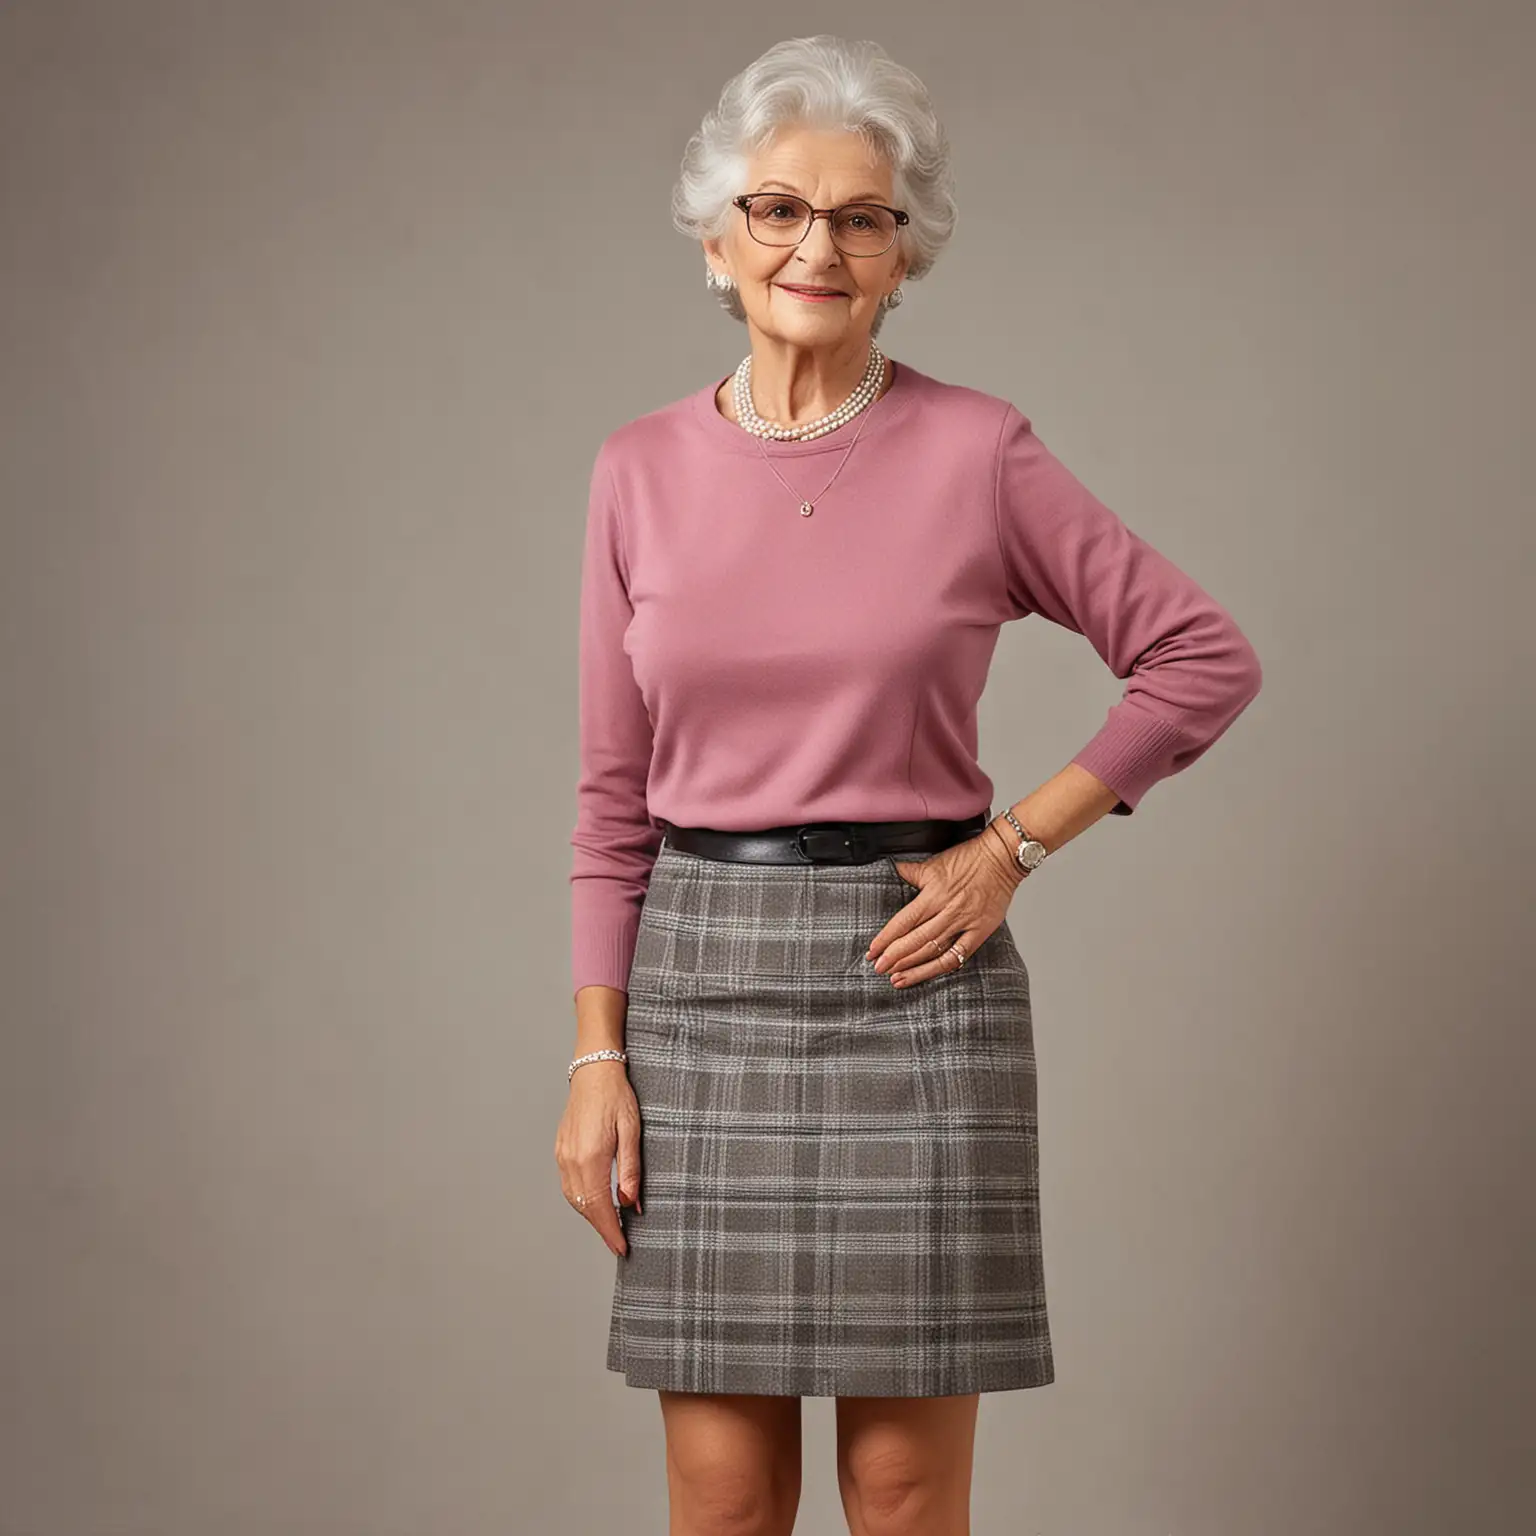 Elegant Senior Woman Teaching in a Chic Mini Skirt